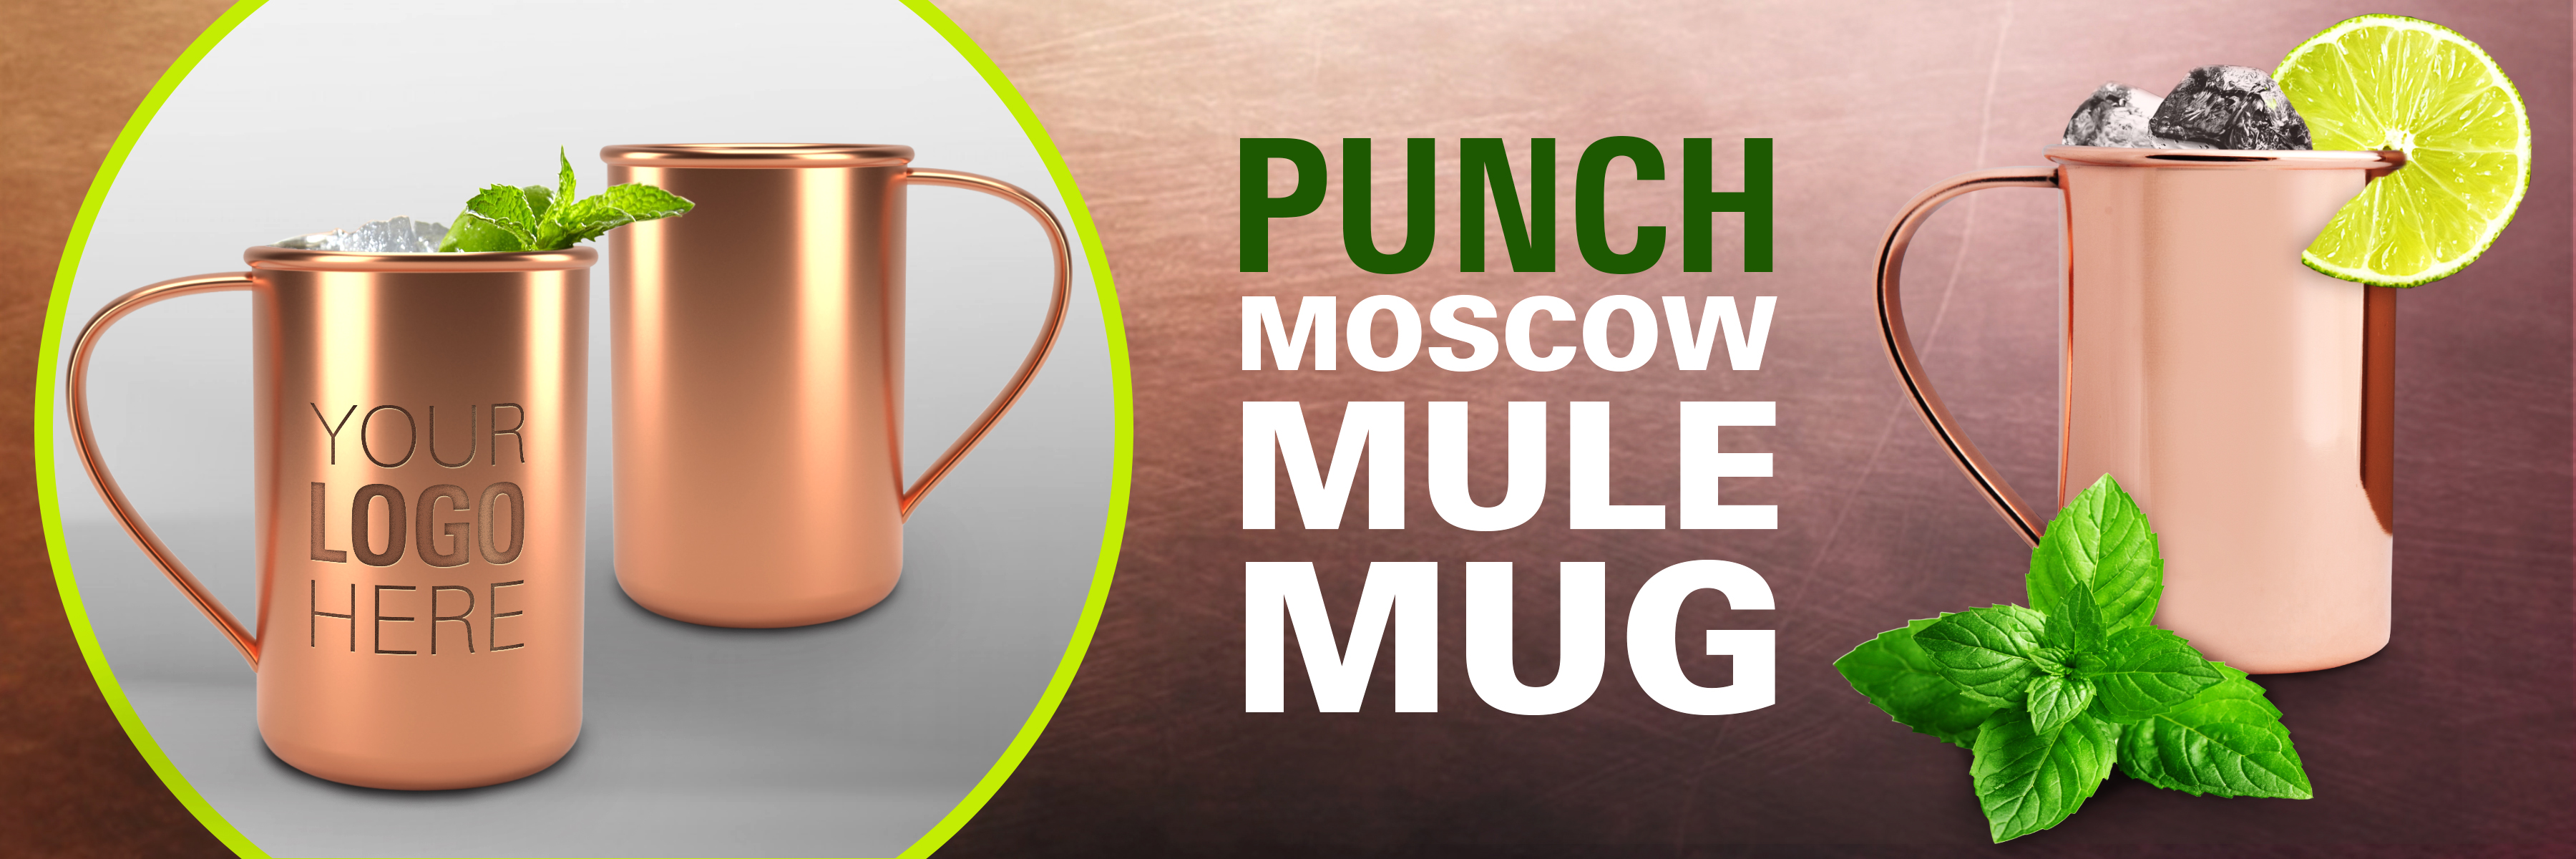 Copper moscow mule mug